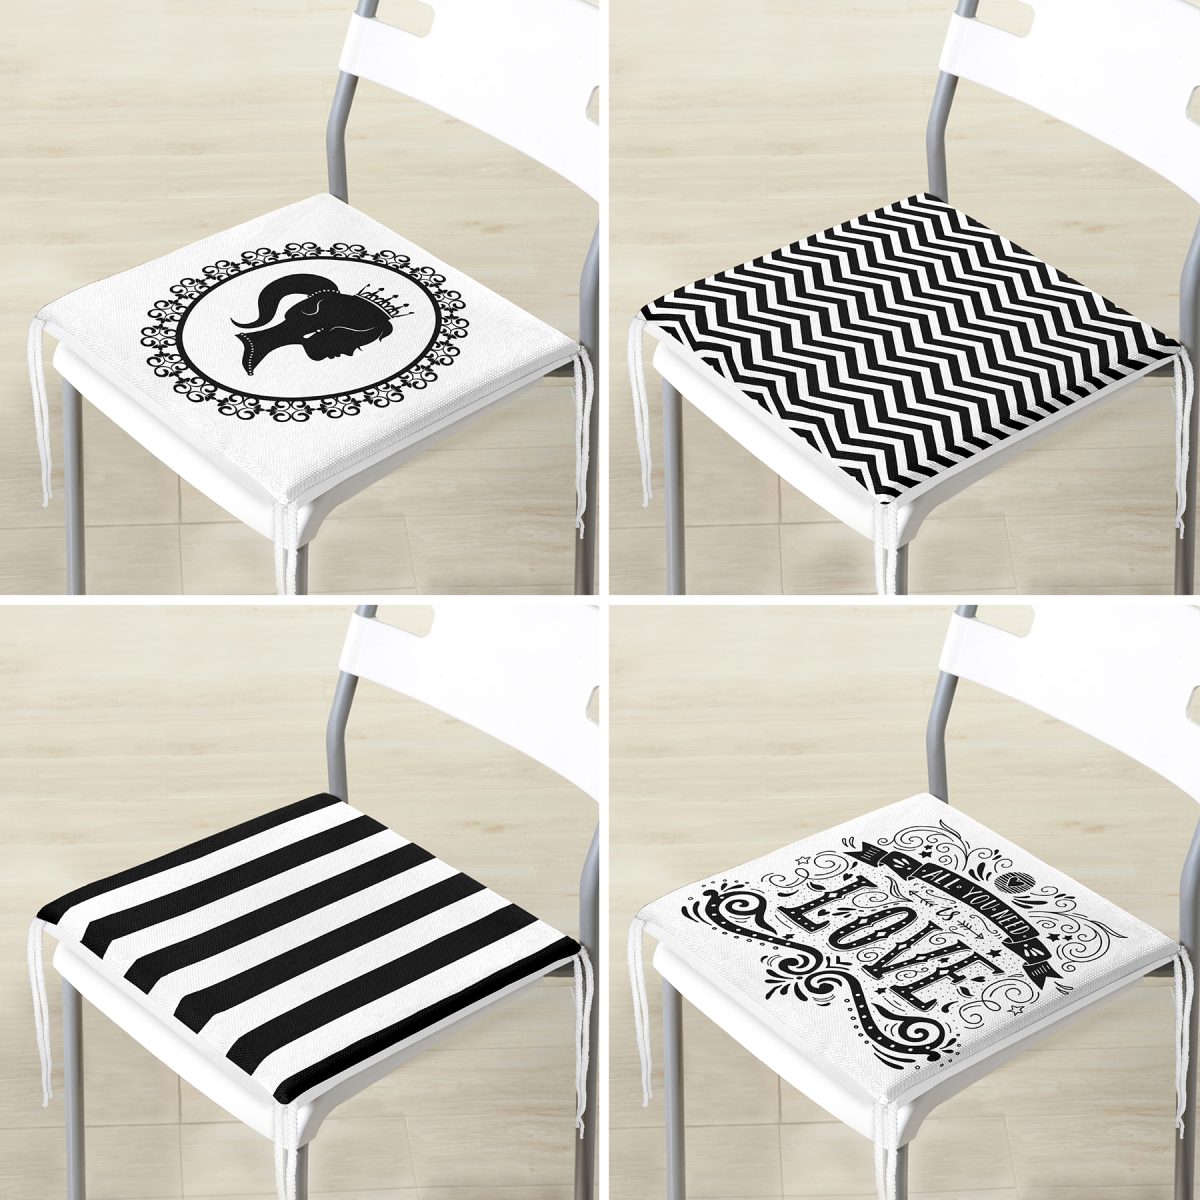 4'lü Siyah Beyaz Renkli Dekoratif Fermuarlı Sandalye Minderi Seti Realhomes